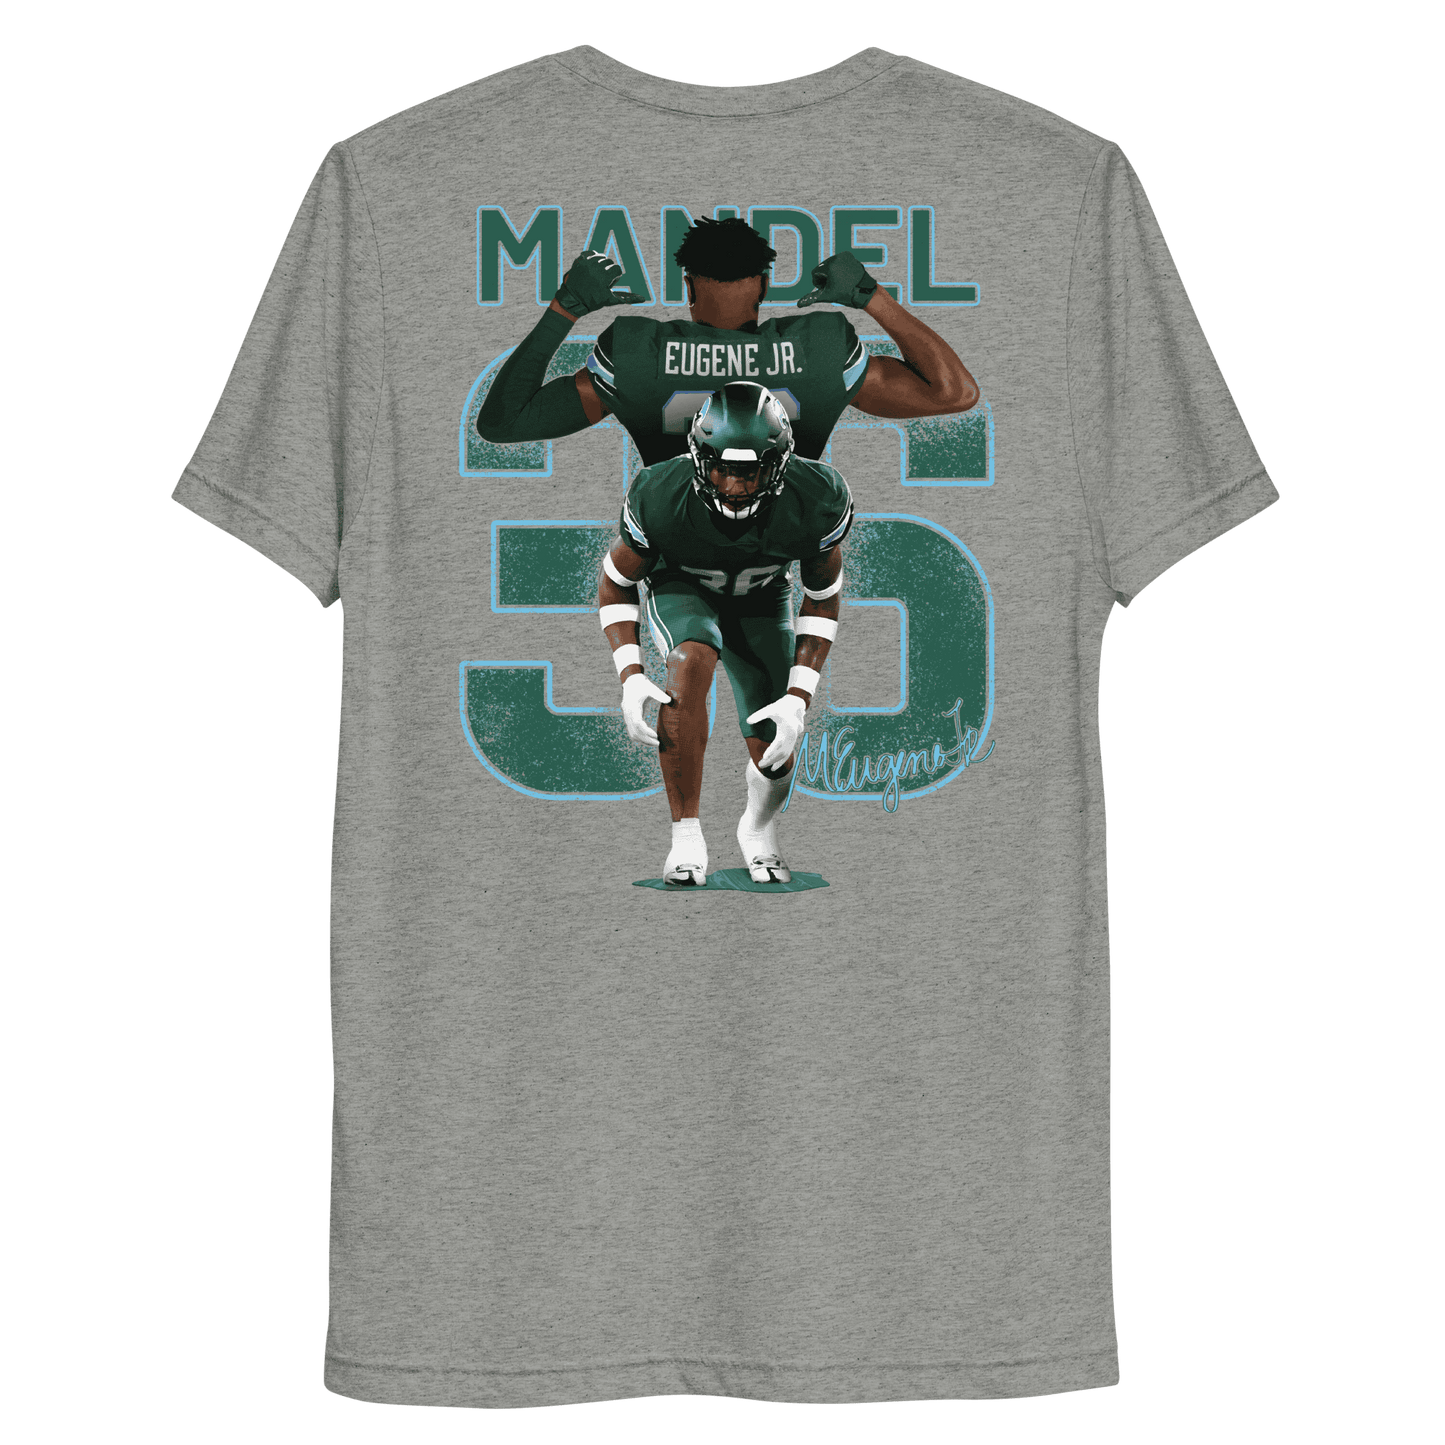 Mandel Eugene Jr. | Mural & Patch Performance Shirt - Clutch -